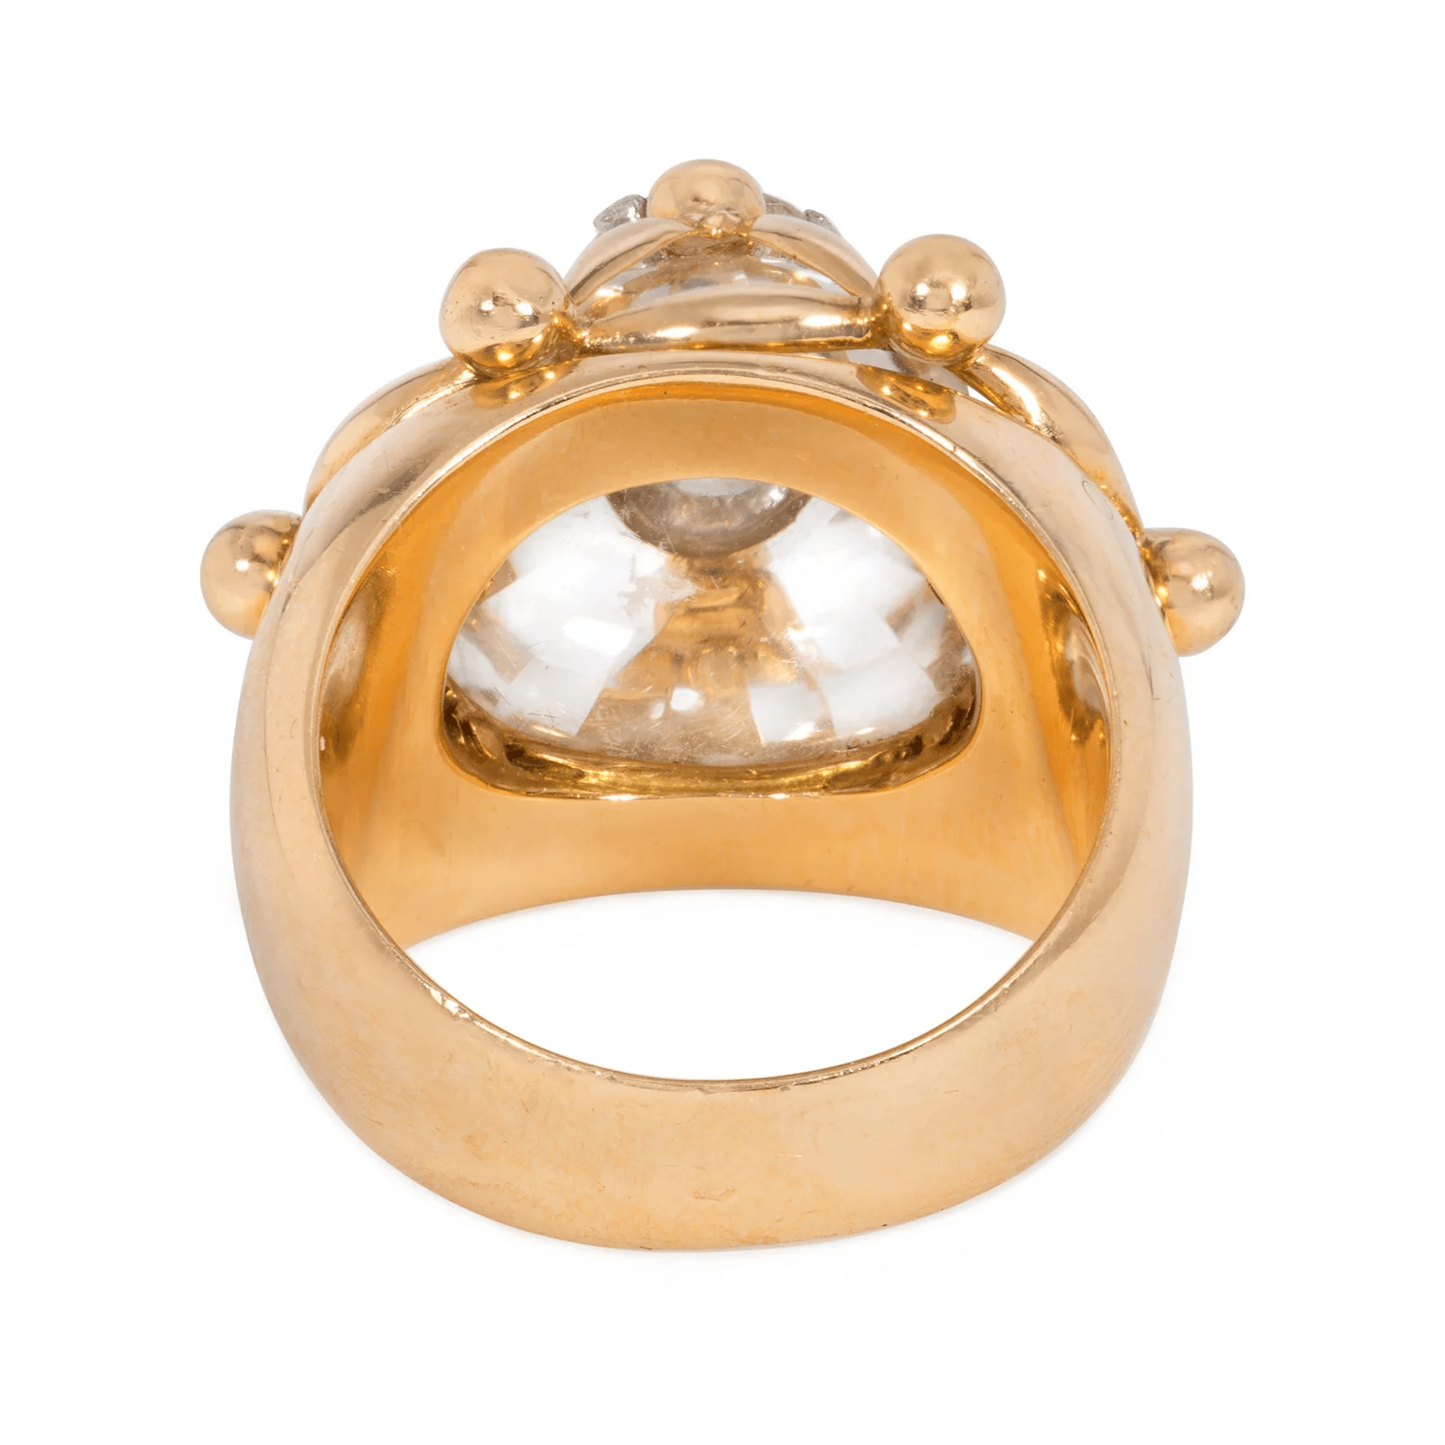 Raymond Topet French 1960s Platinum & 18KT Yellow Gold Diamond & Rock Crystal Ring back